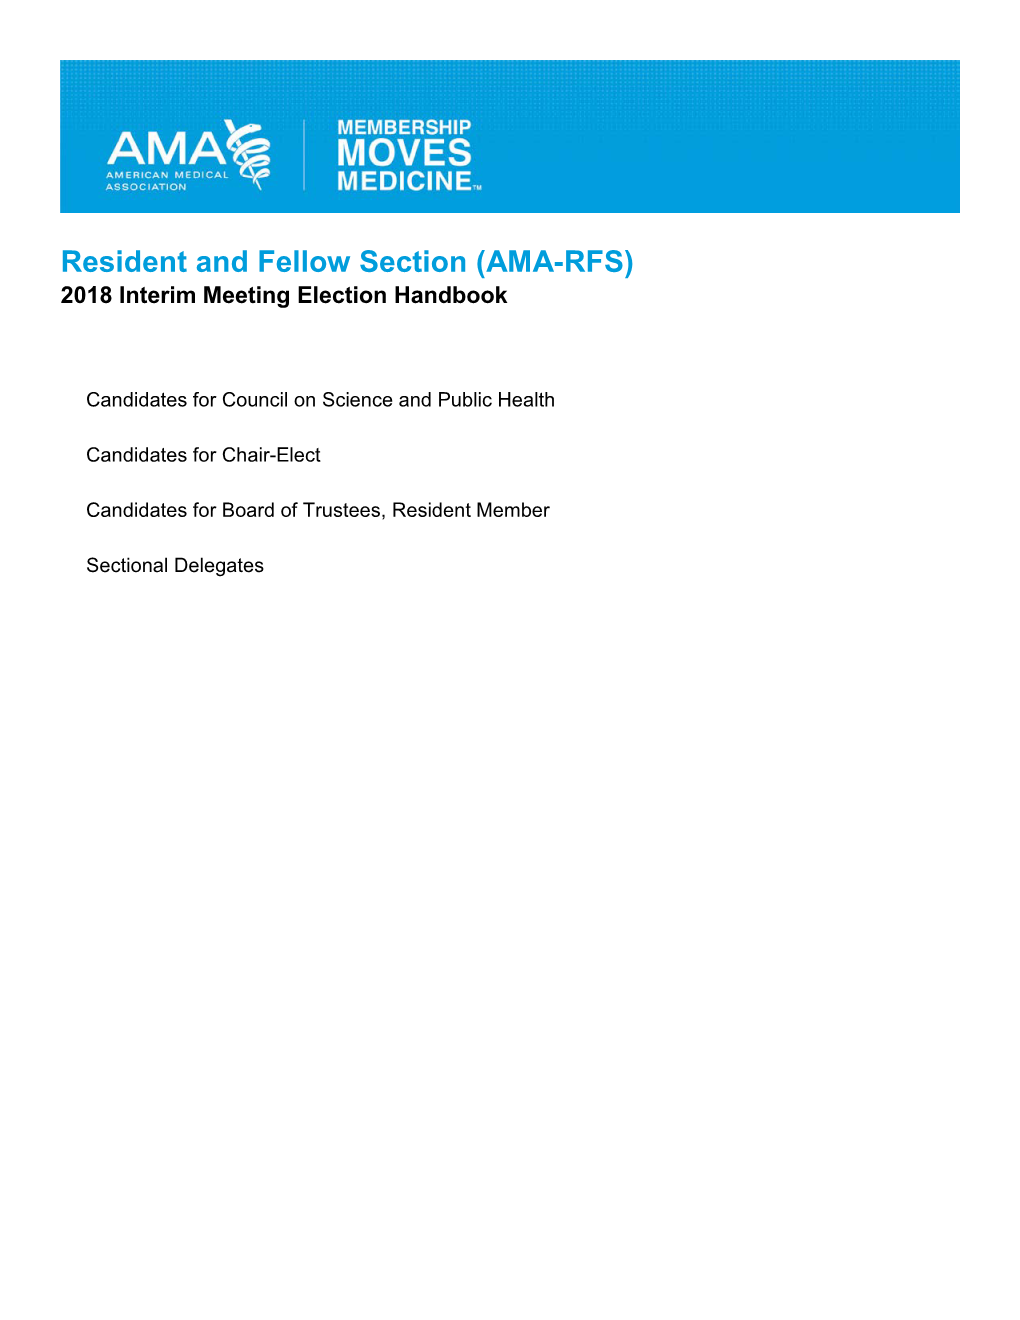 Resident and Fellow Section (AMA-RFS) 2018 Interim Meeting Election Handbook